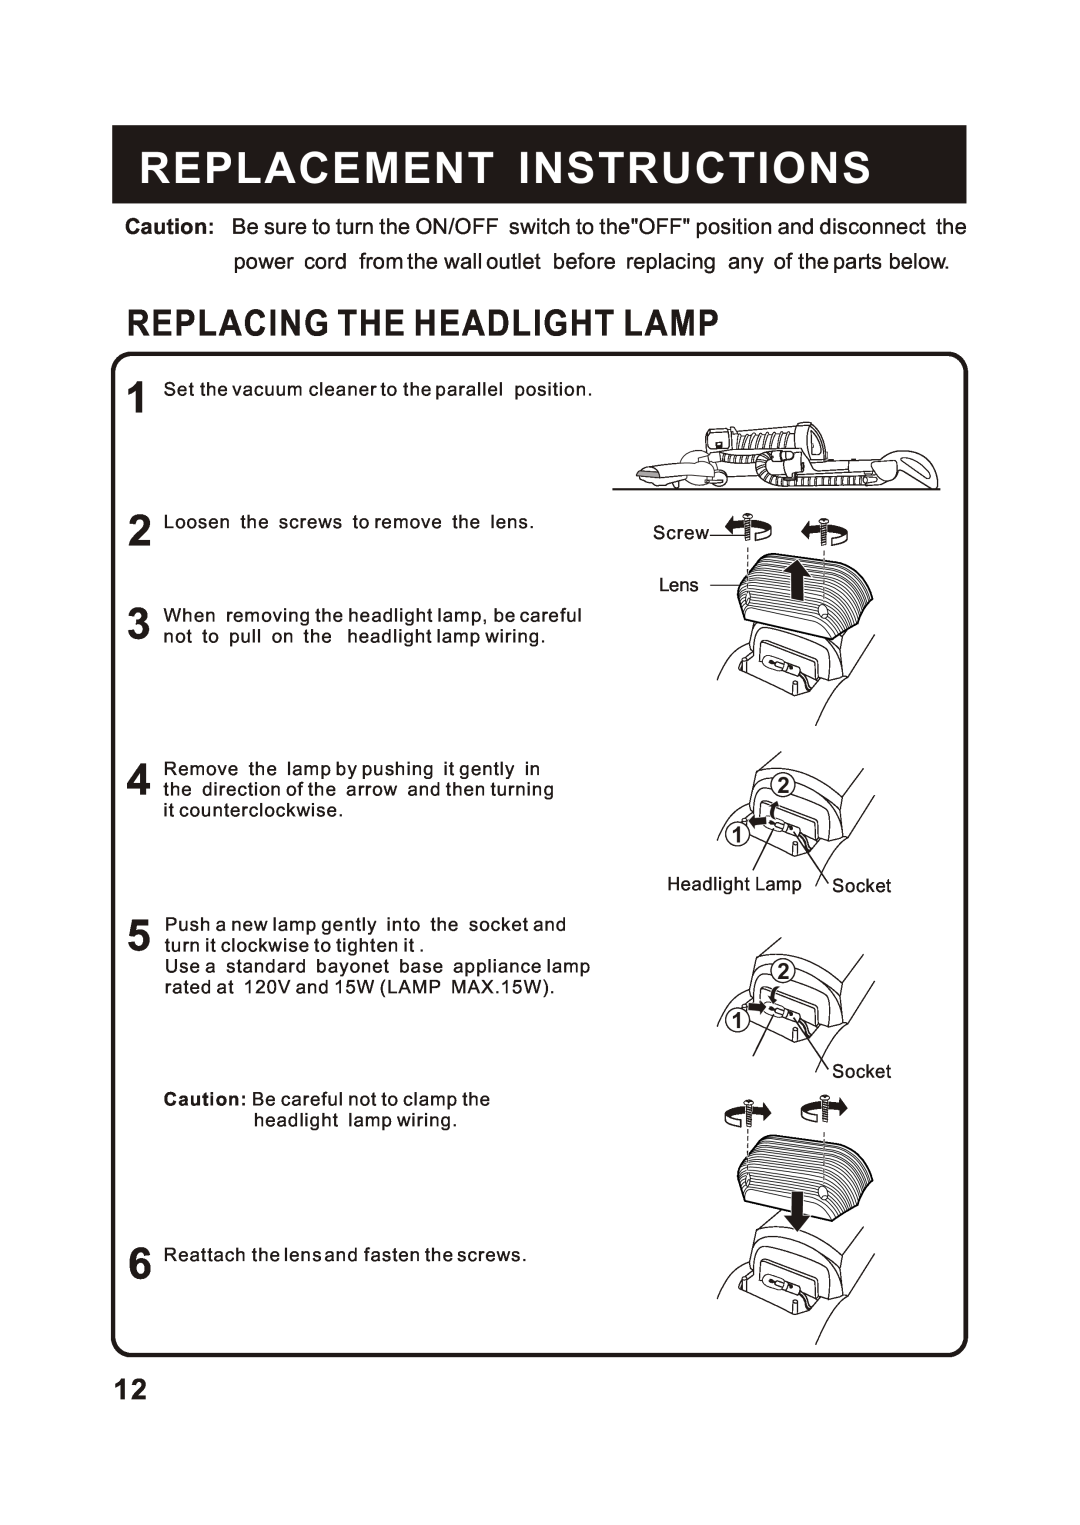 Fantom Vacuum FM655CS instruction manual Replacement Instructions, Replacing The Headlight Lamp 